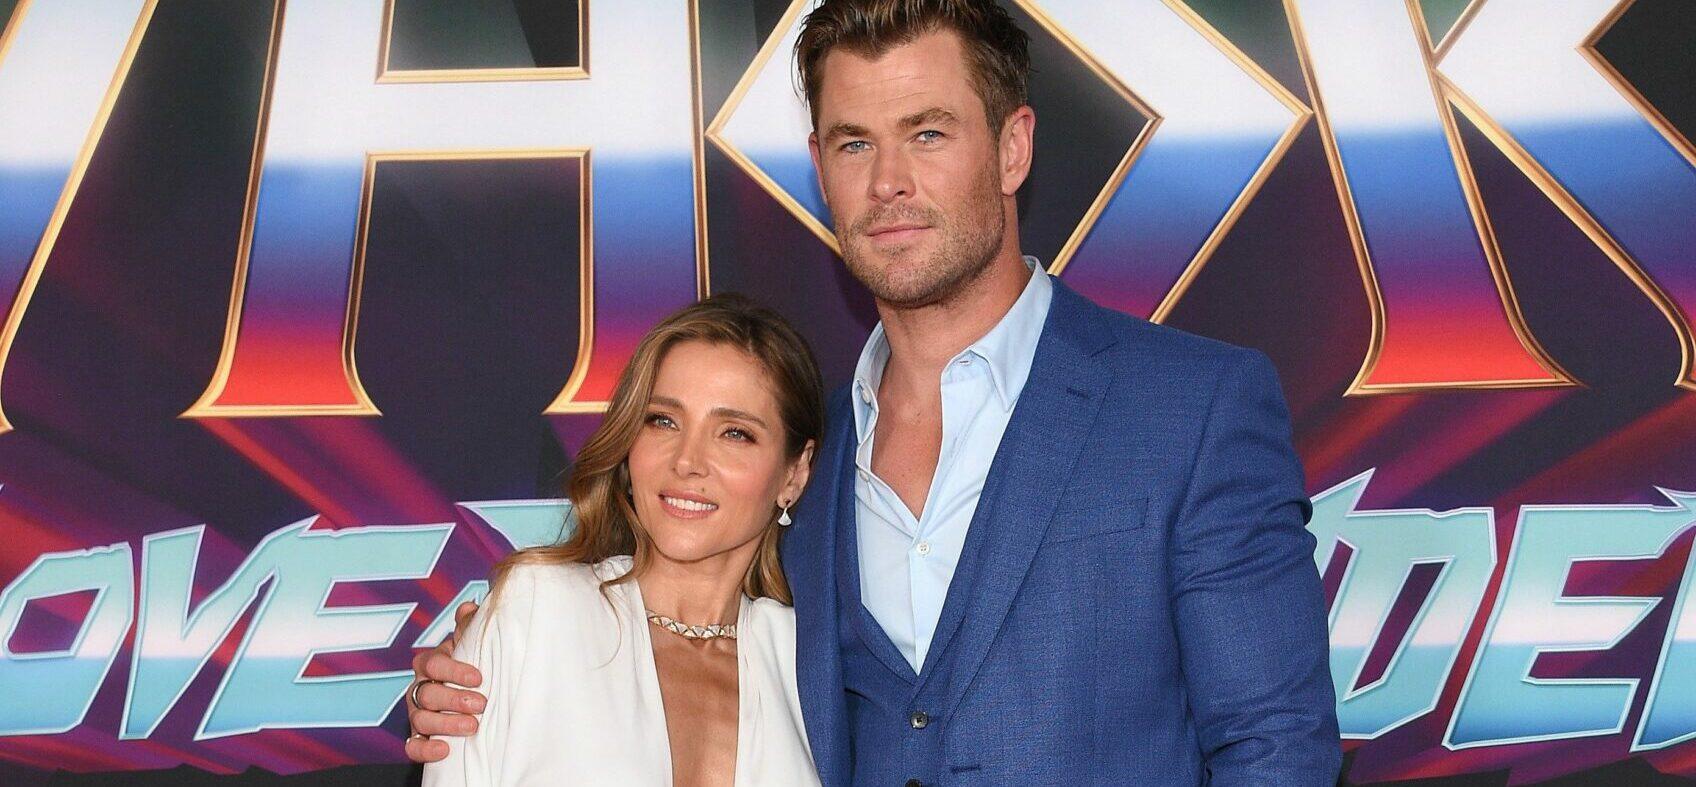 Chris Hemsworth’s Wife Elsa Pataky Said ‘YUCK’ To His HUGE ‘Thor’ Muscles!